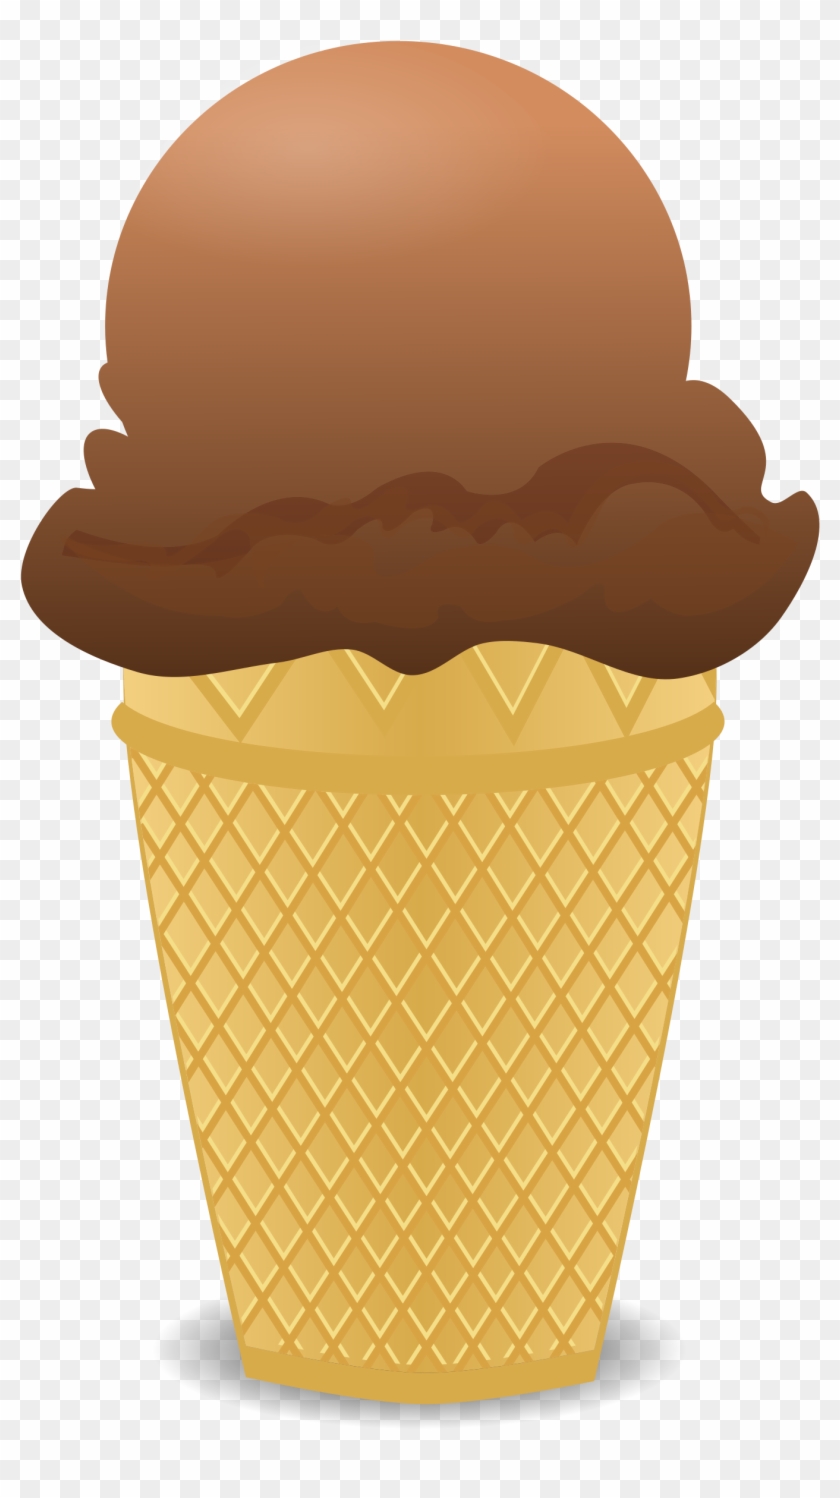 Icecream Png - Chocolate Ice Cream Cone Clipart #558220